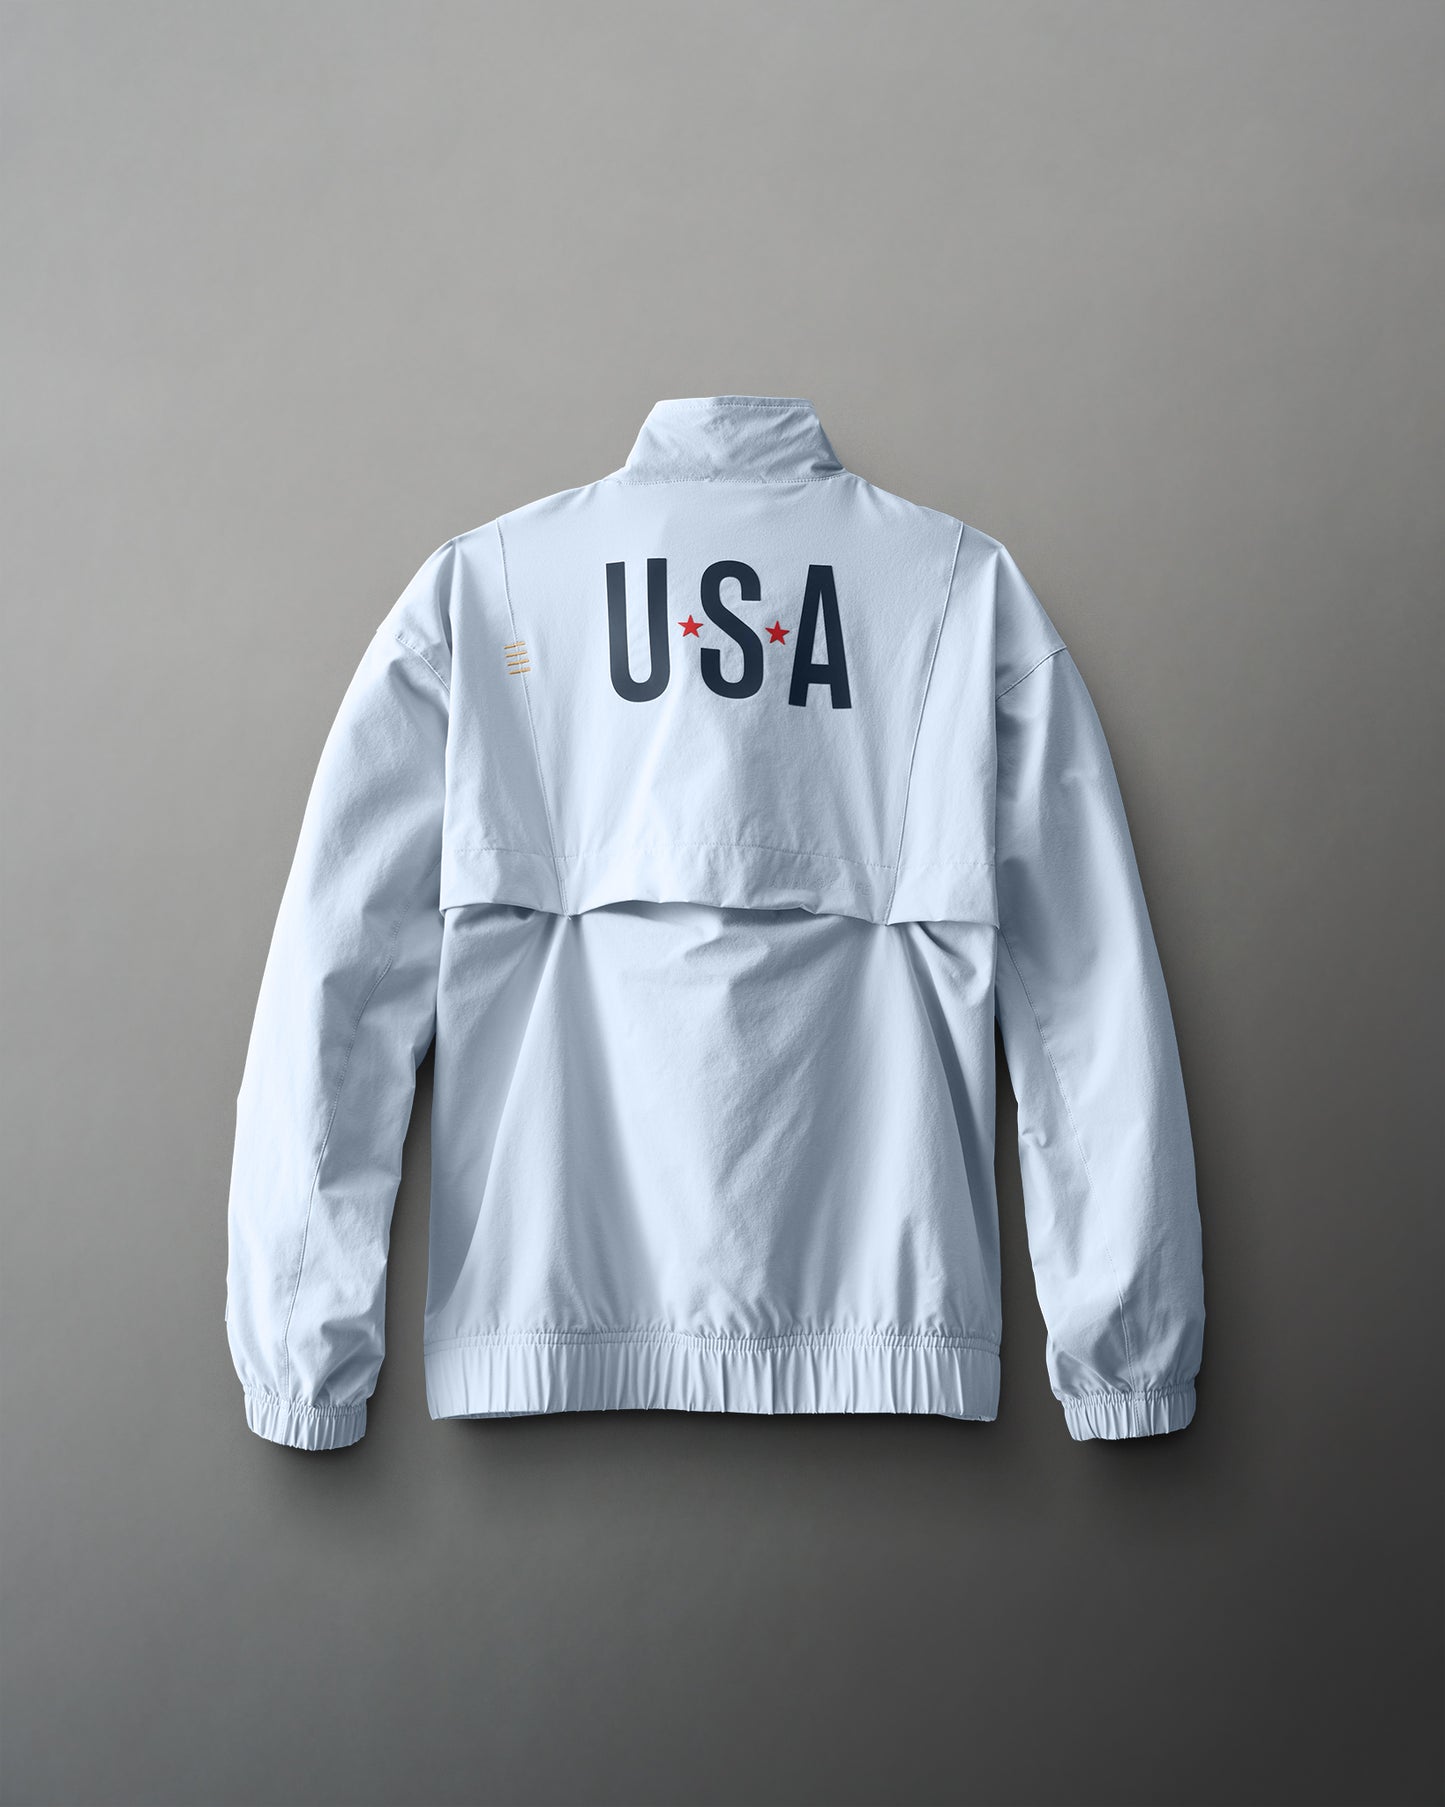 USA Gold Standard Youth Jacket